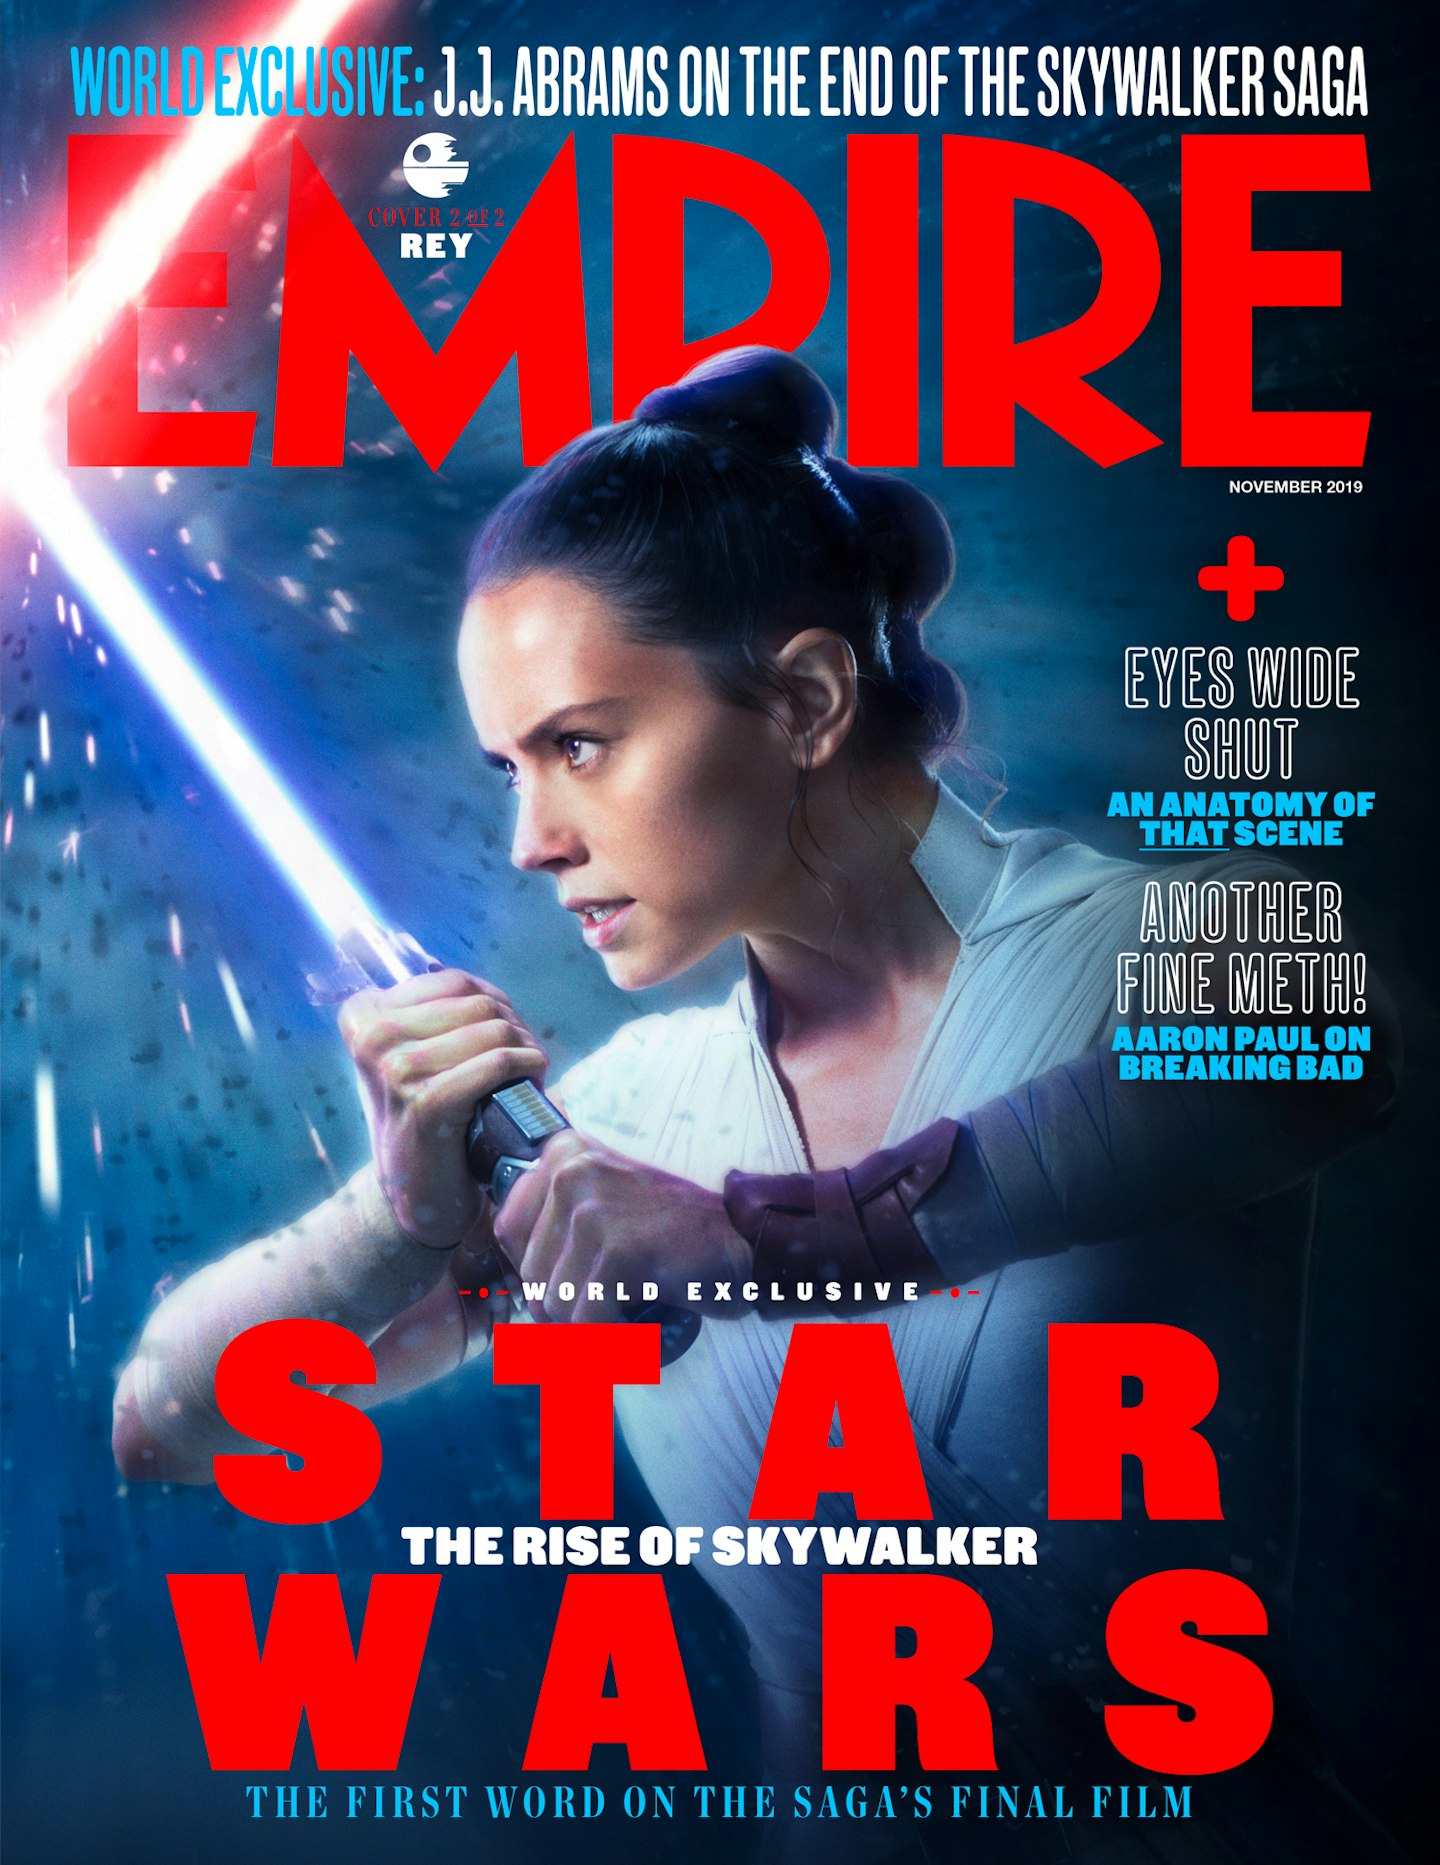 Empire November 2019 – Star Wars Rise Of Skywalker cover – Rey